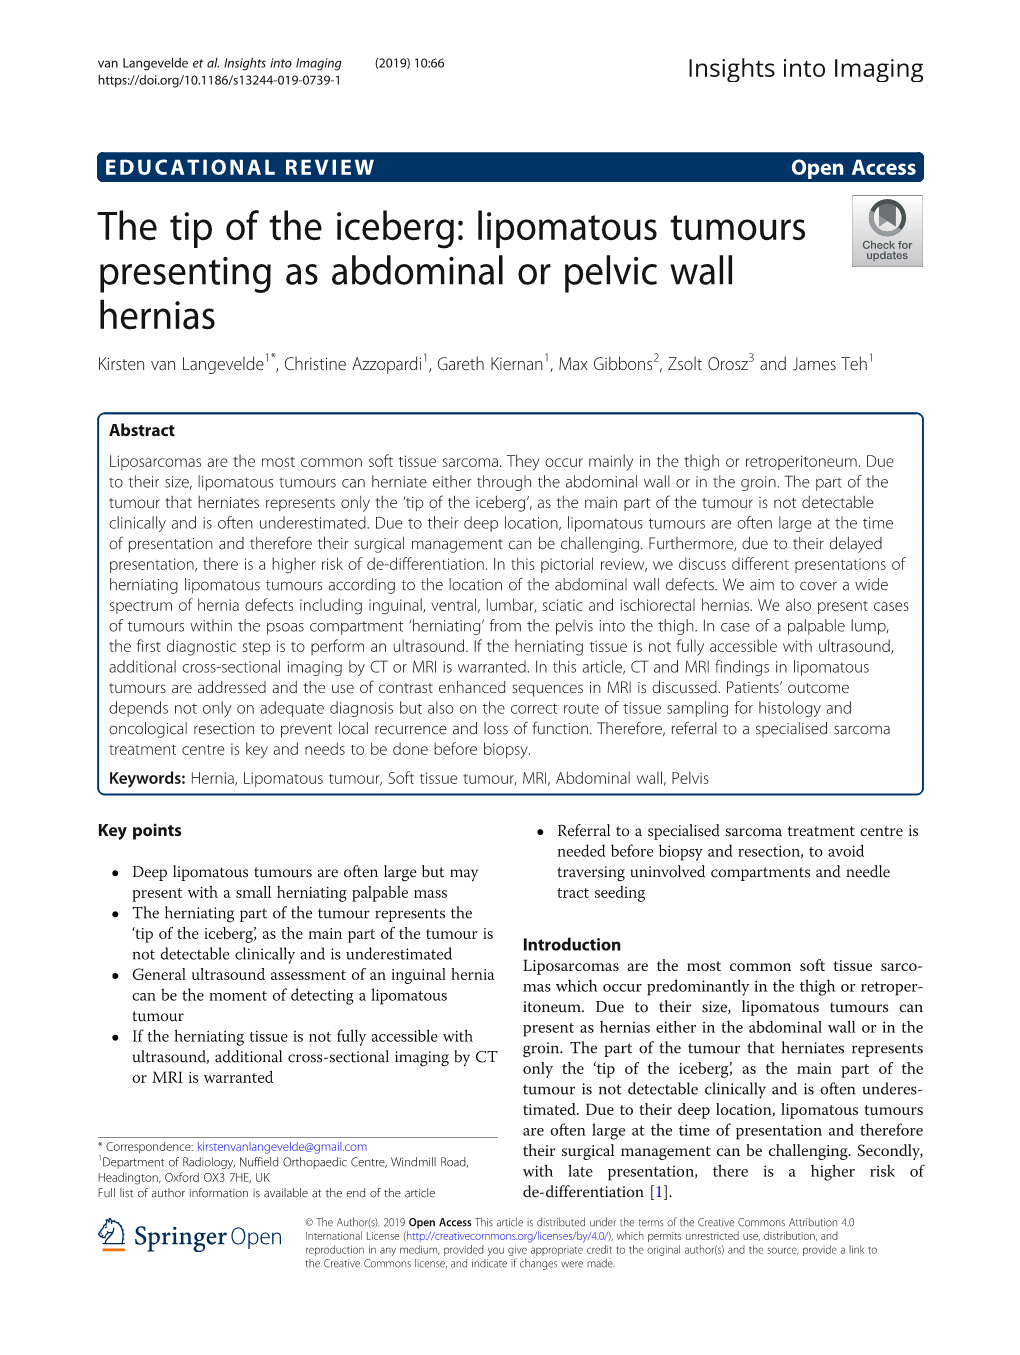 The Tip of the Iceberg: Lipomatous Tumours Presenting As Abdominal Or Pelvic Wall Hernias